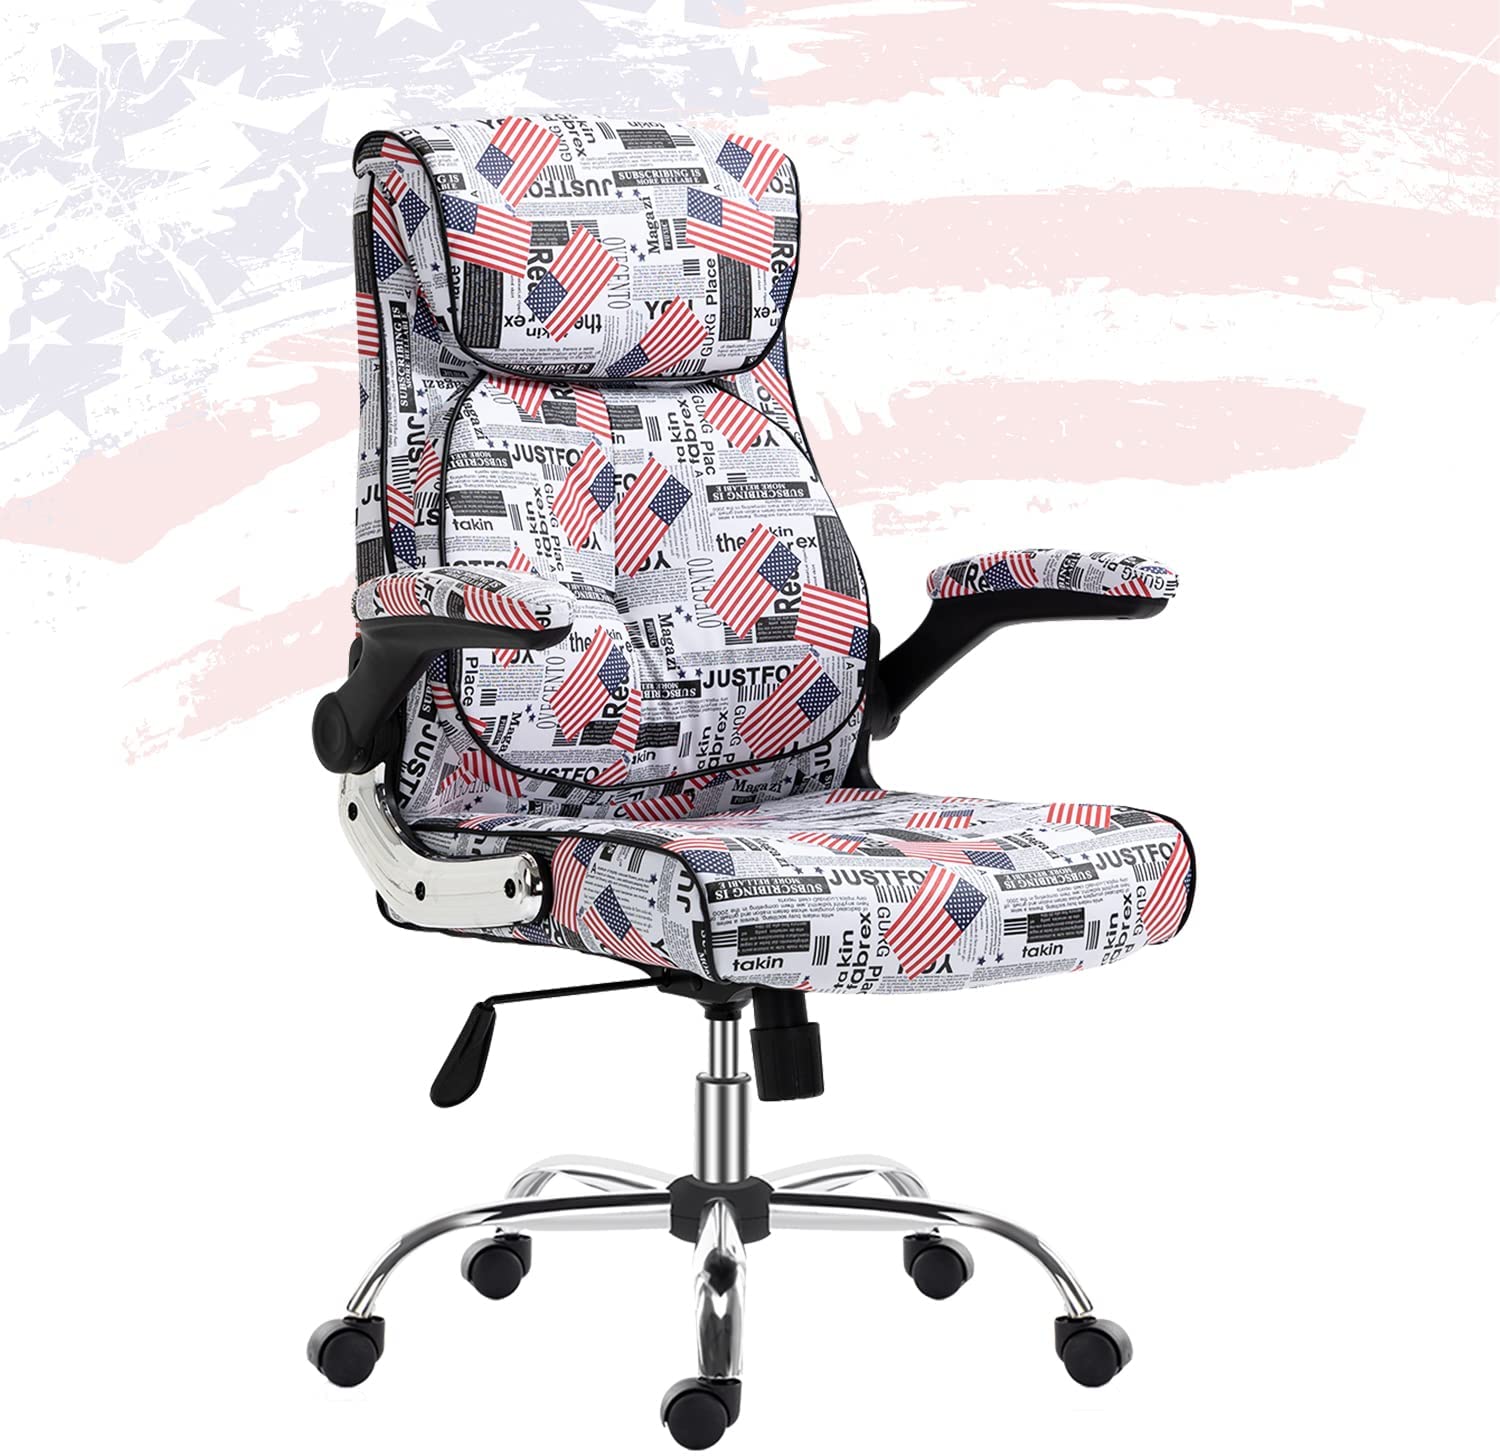 KERMS Patriotic Multifunctional Executive Desk Chair